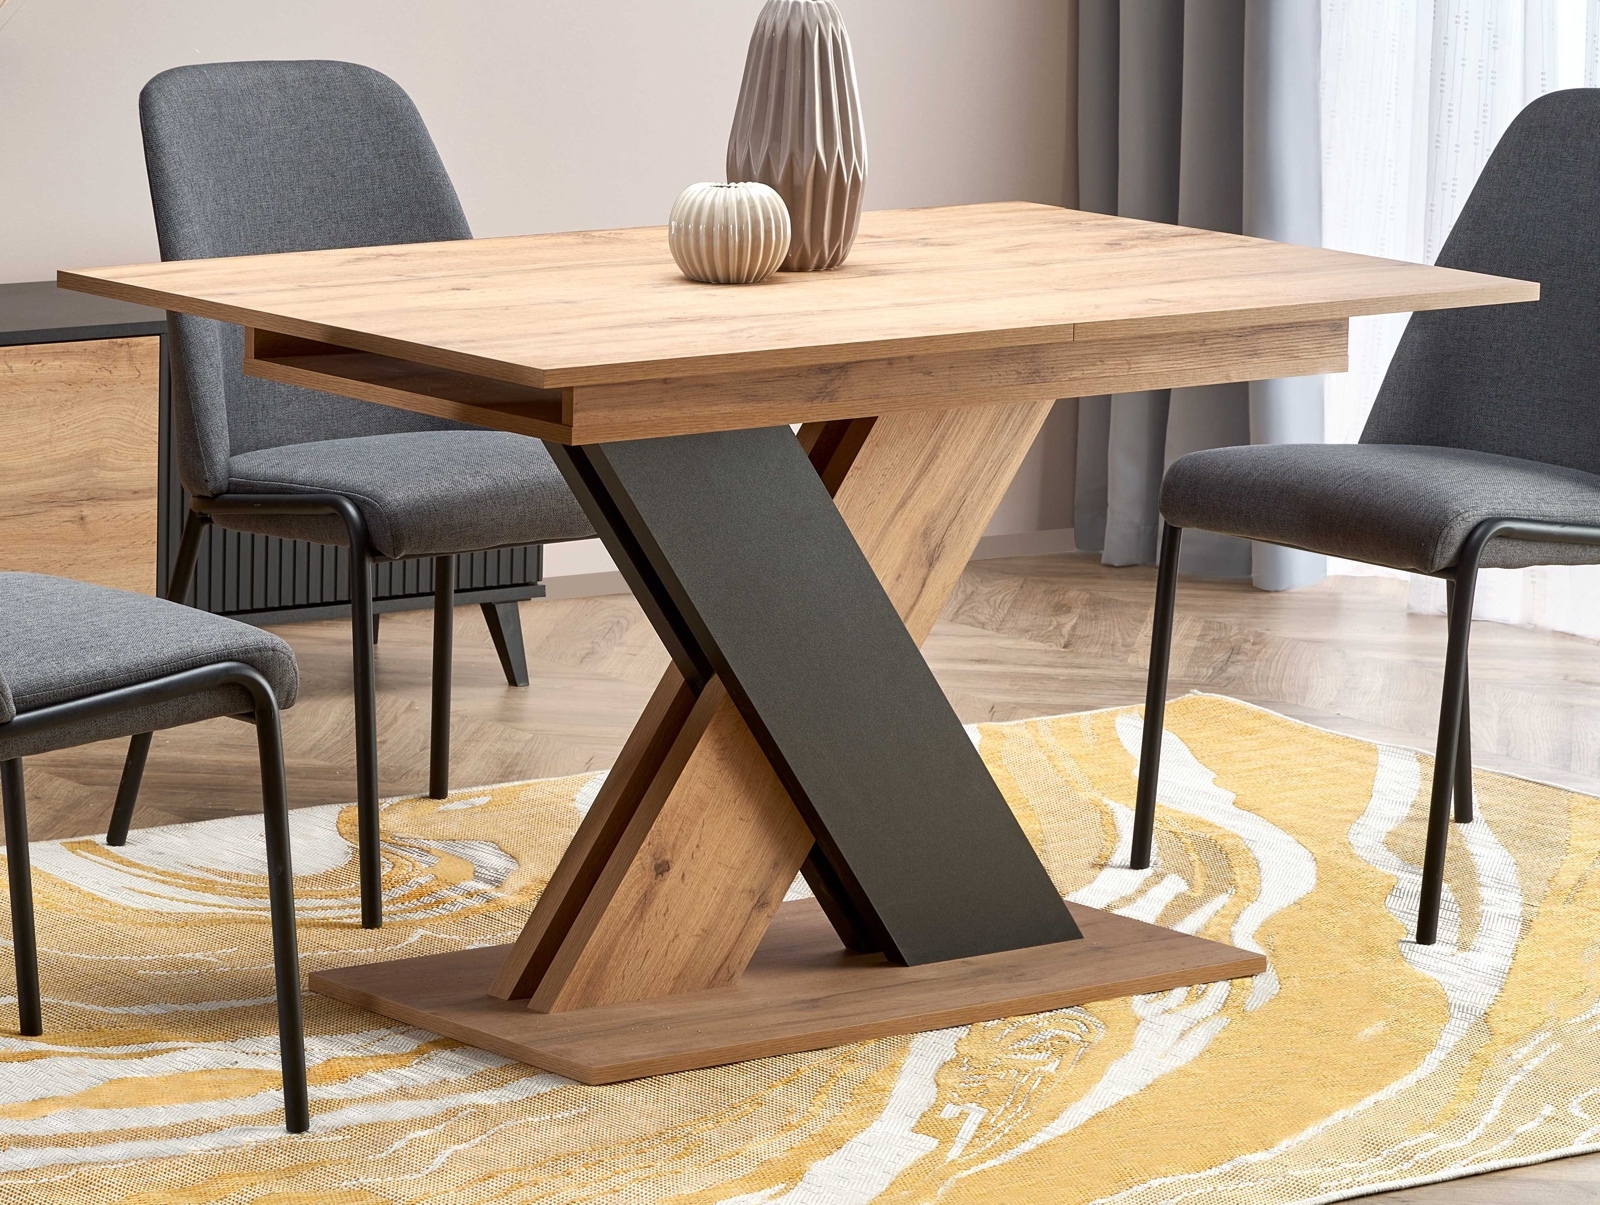 Фото - Обідній стіл Halmar Stół do jadalni z nogą w kształcie litery X Xarelto 